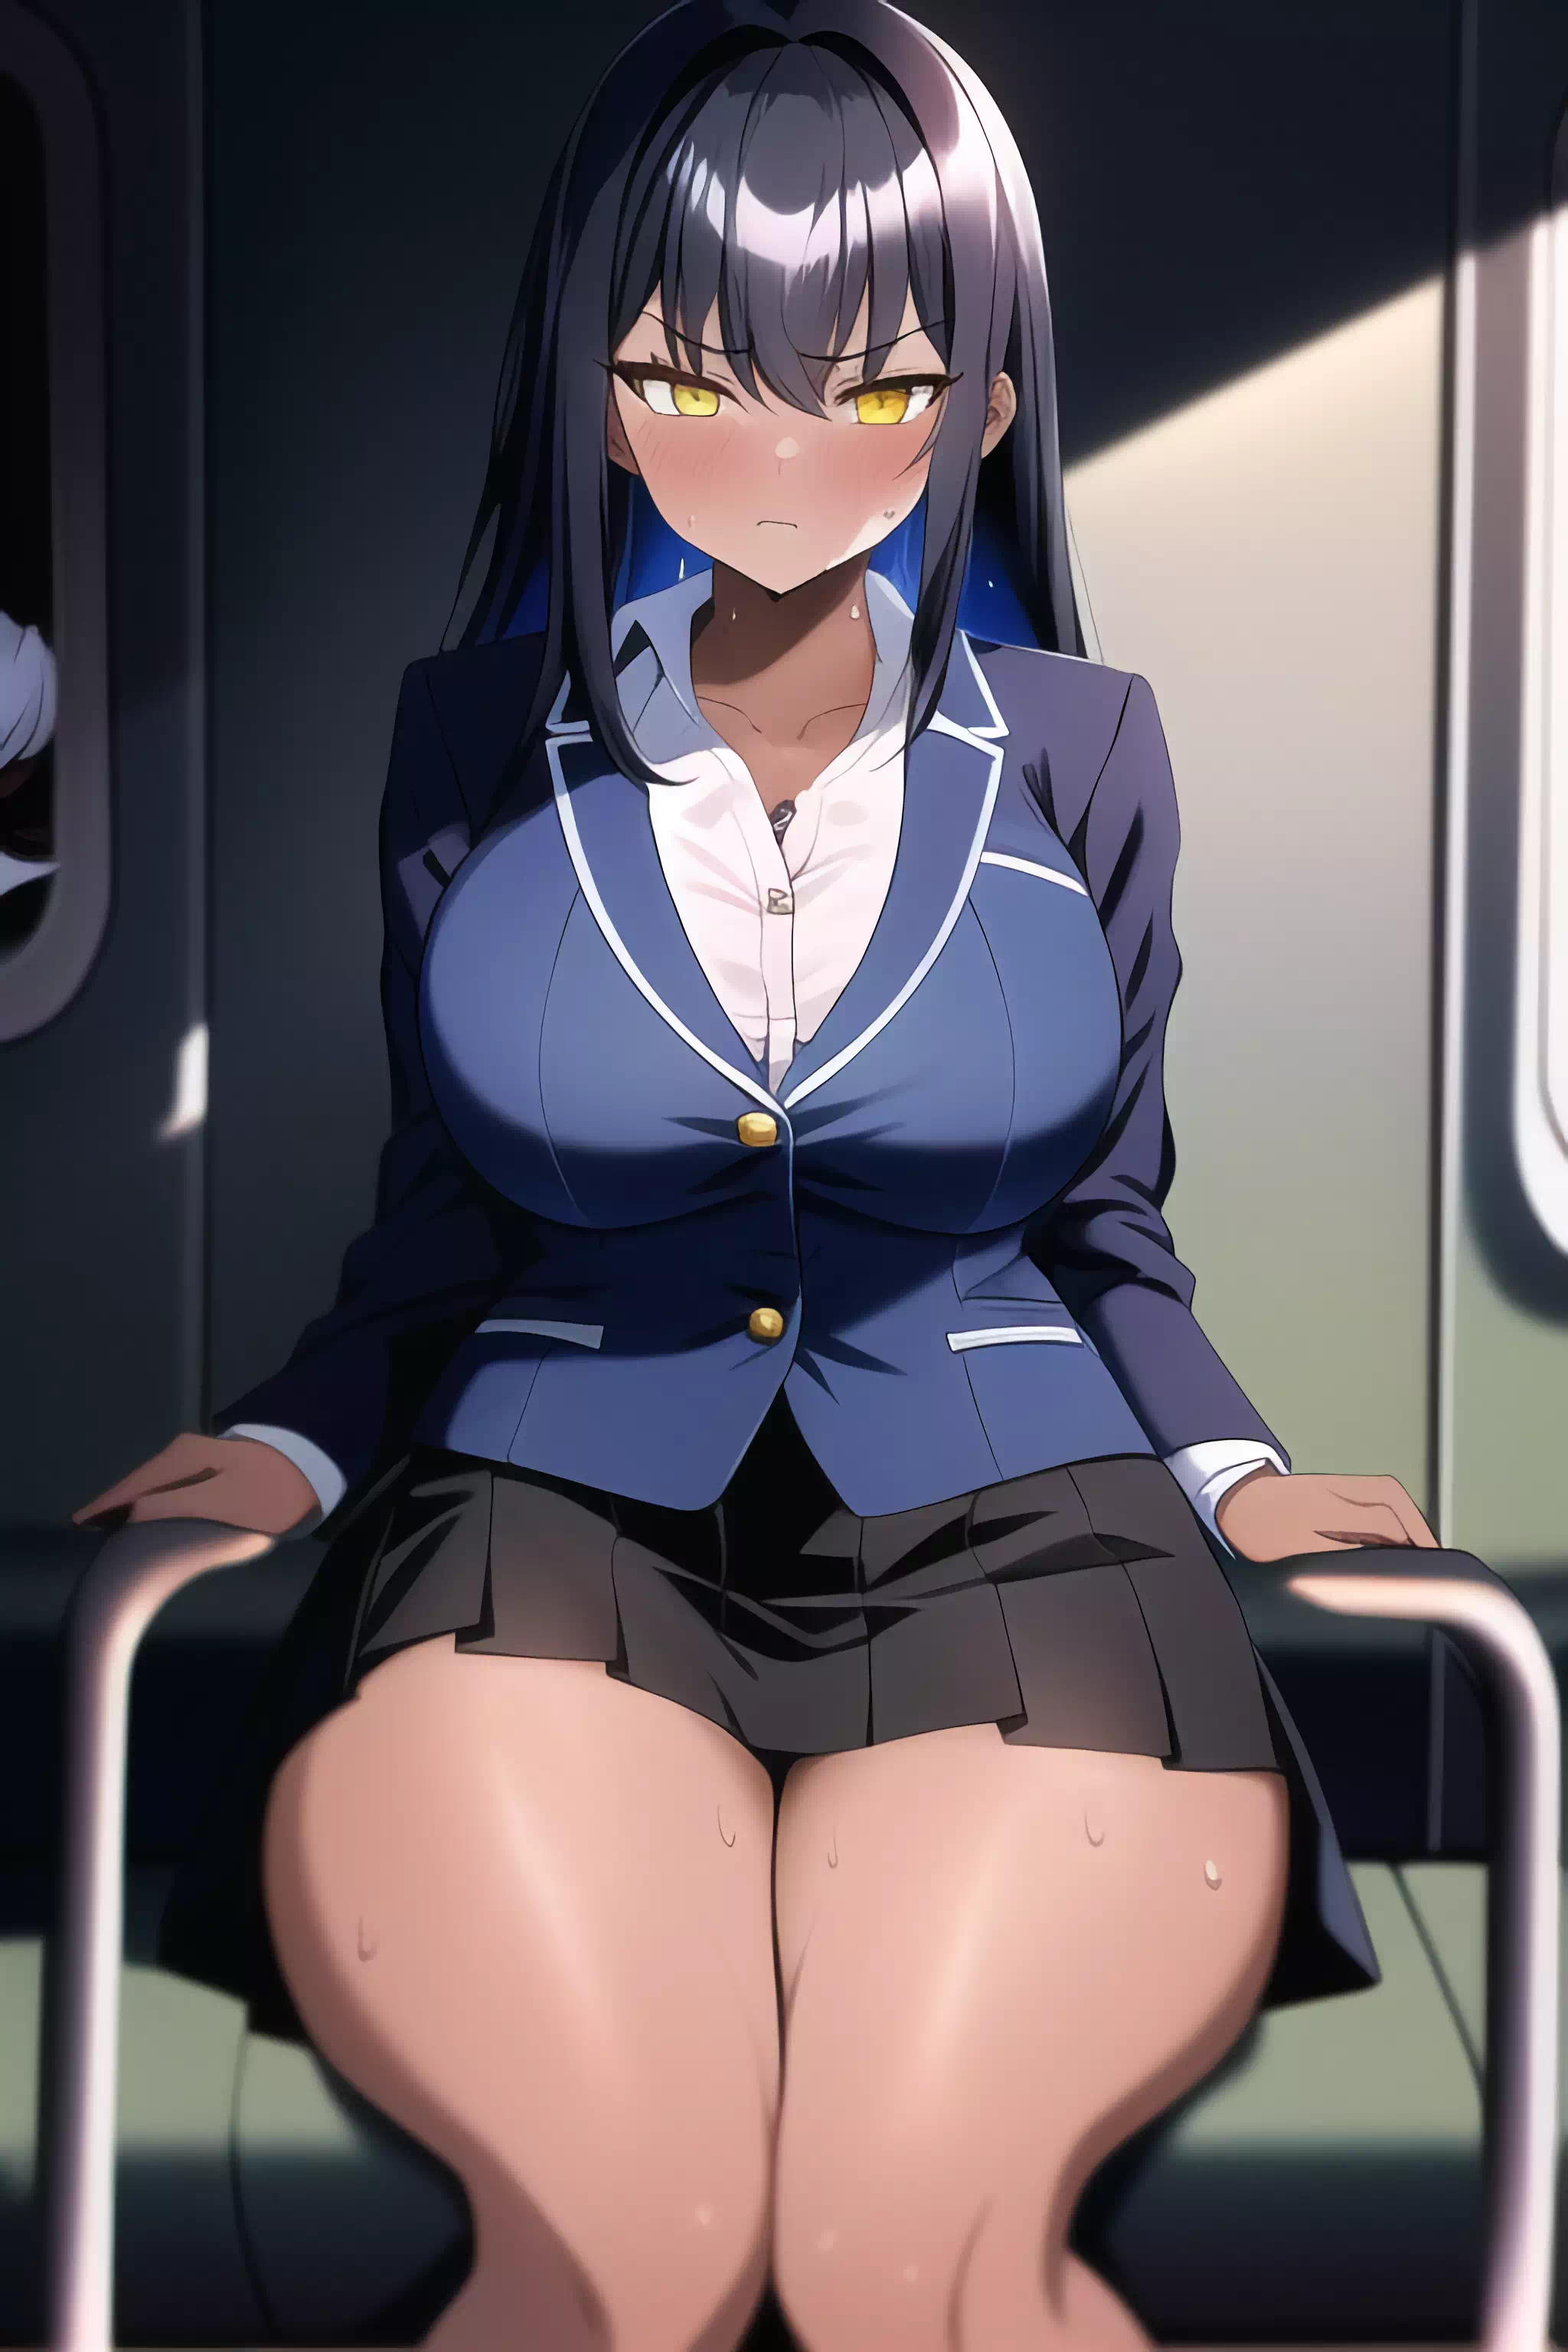 Karin riding the train